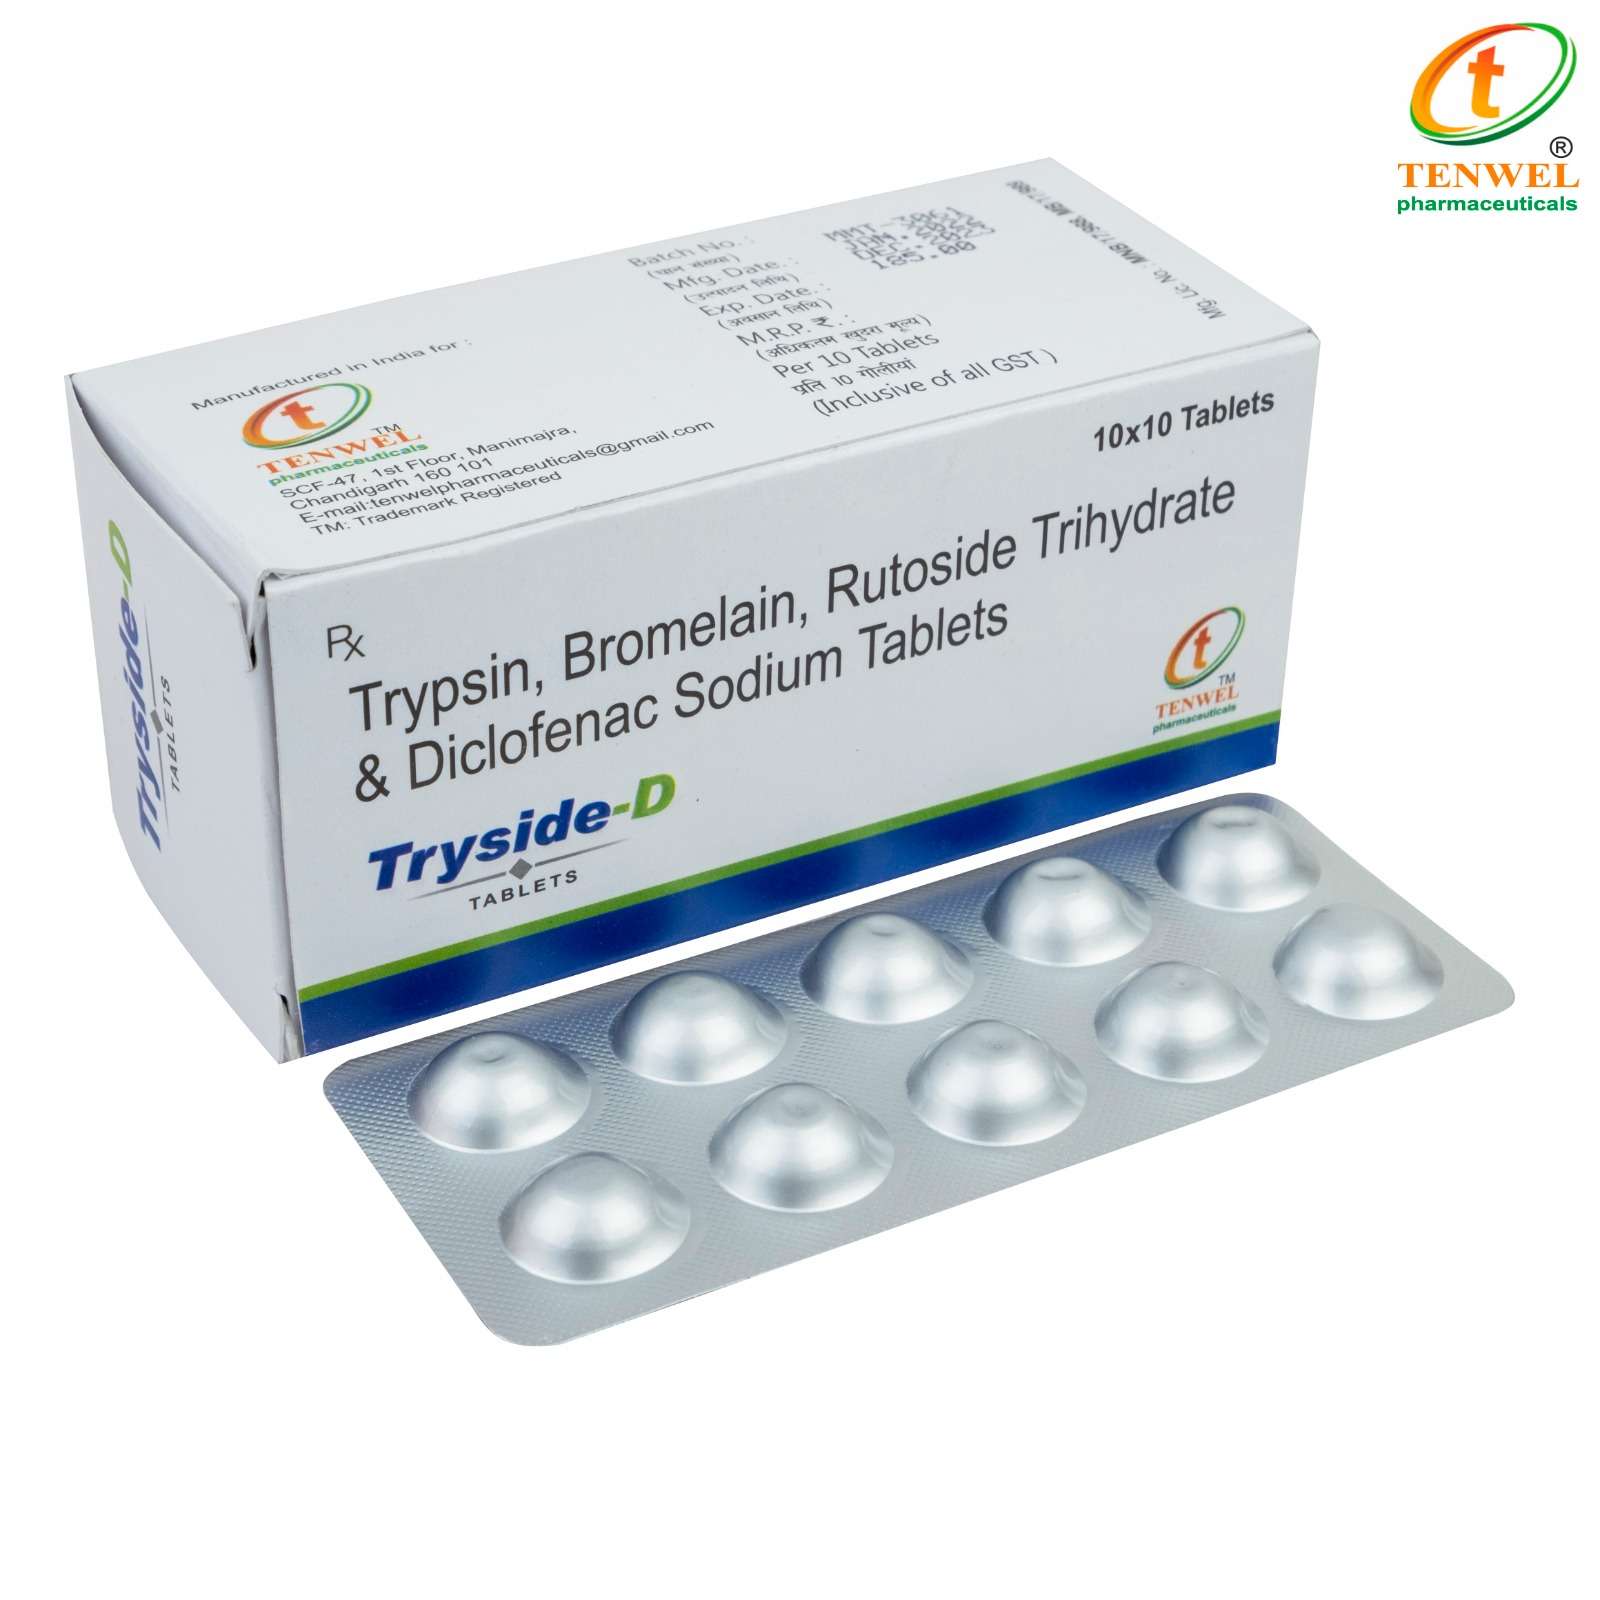 trypsin 48mg + bromelain 90mg + rutoside trihydrate 100mg + diclofenac 50mg